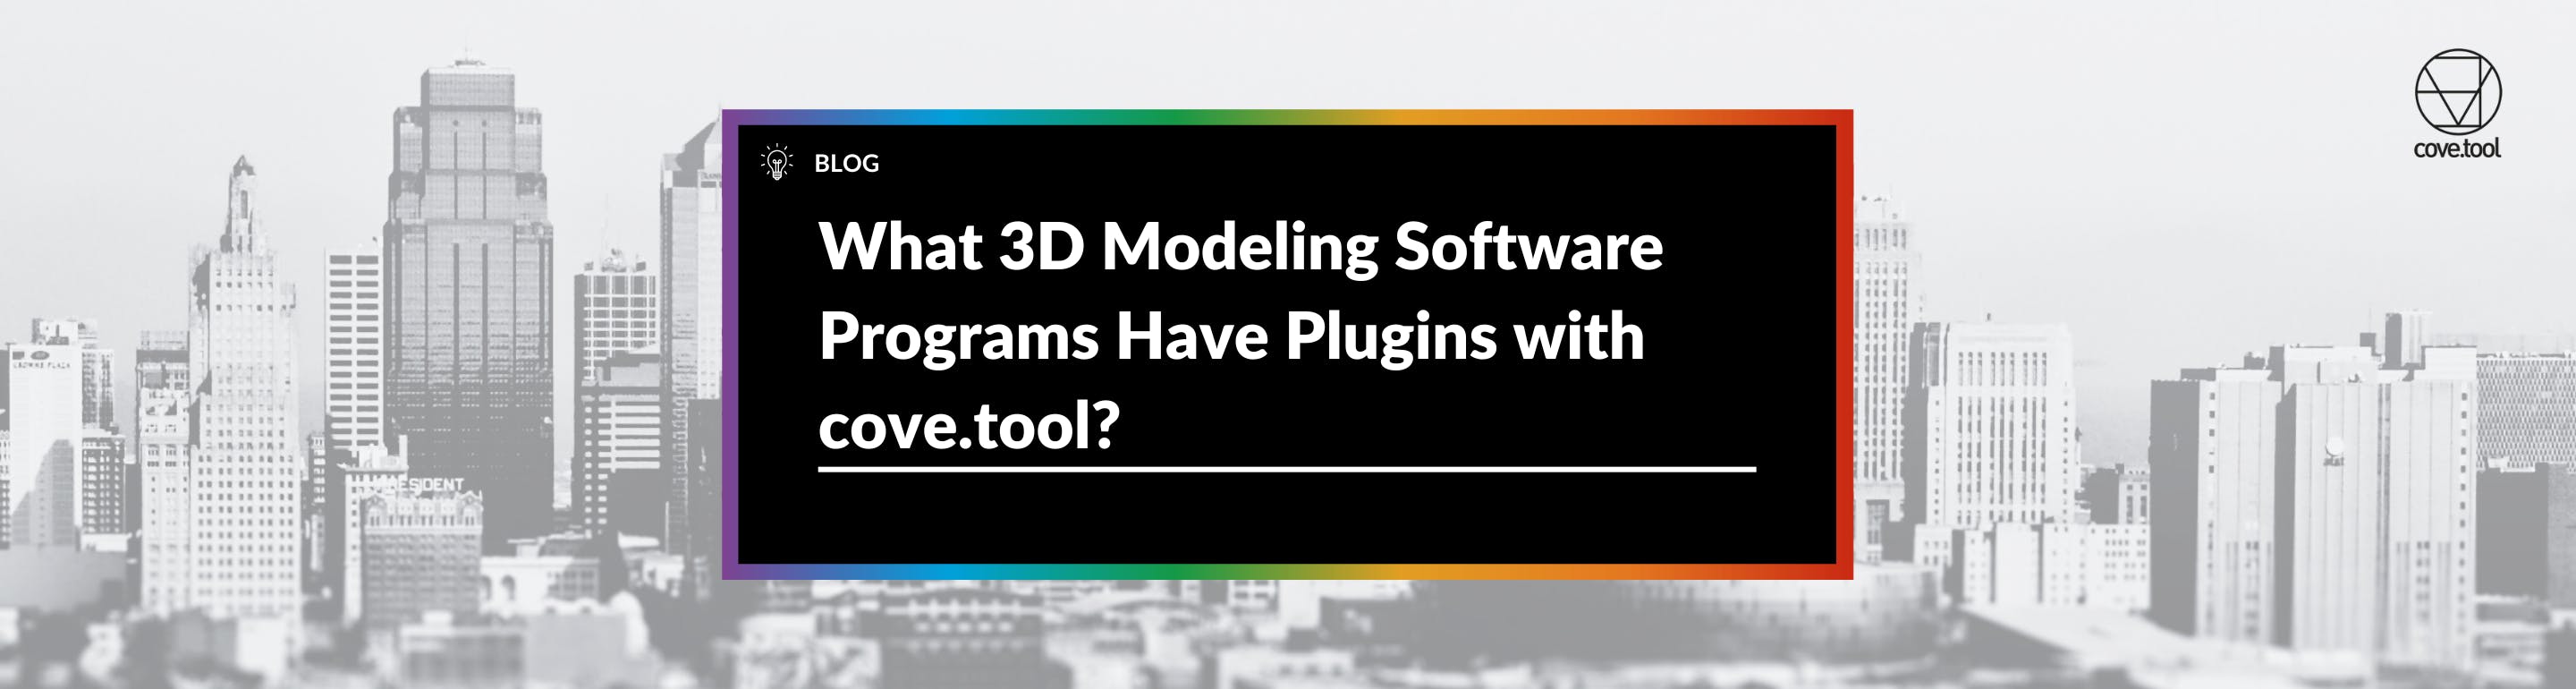 cove.tool 3D modeling software program plugins 